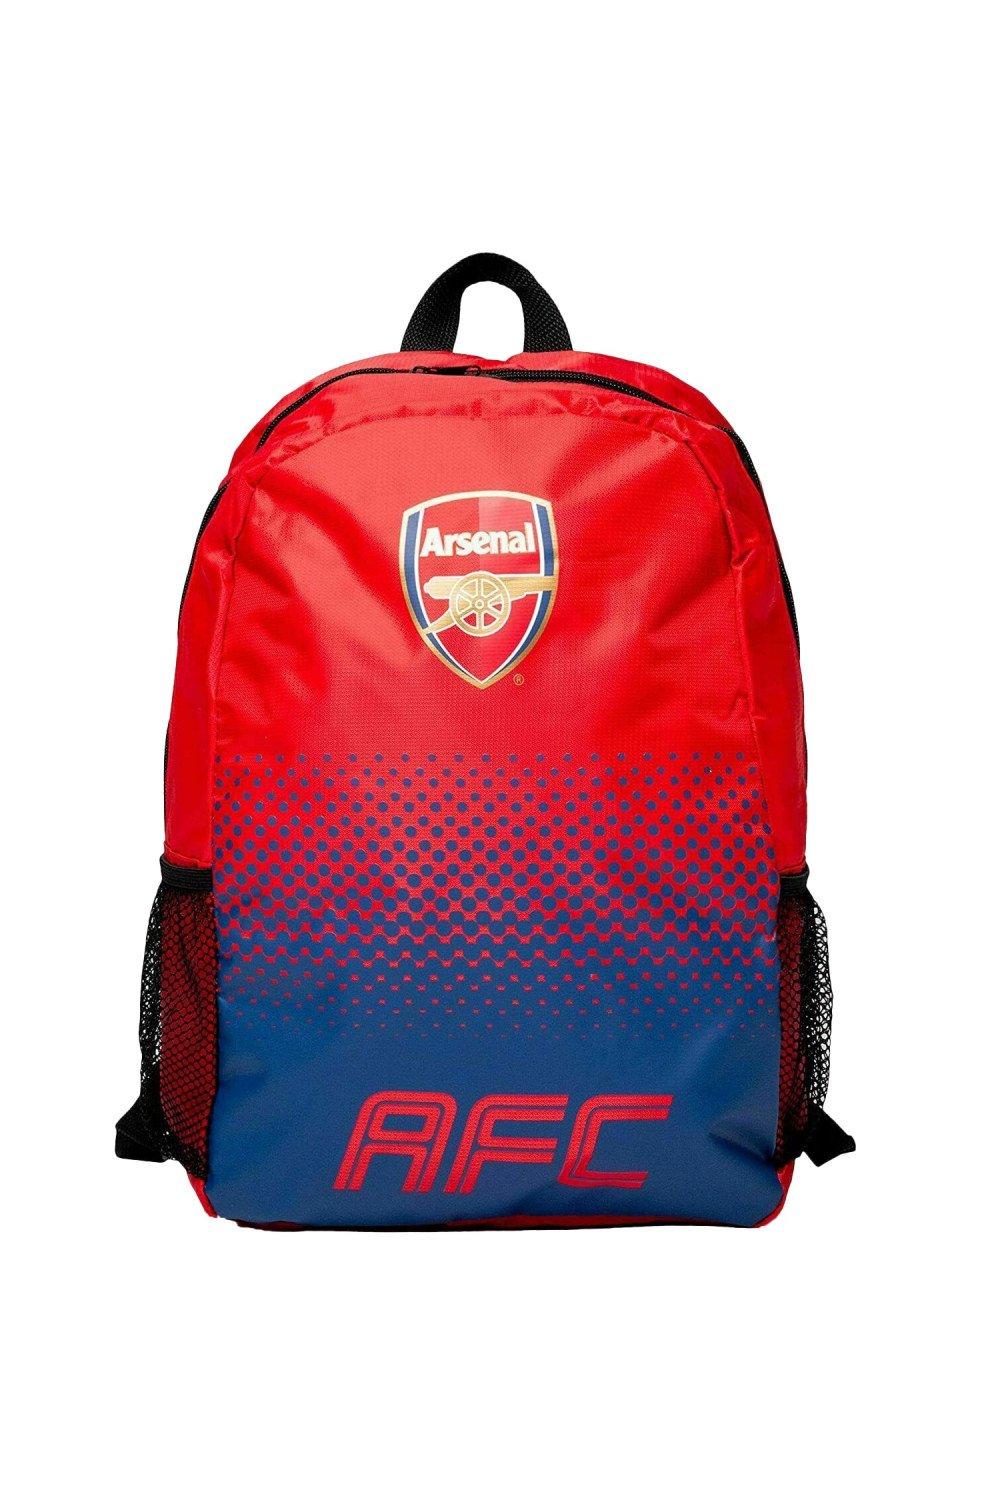 Рюкзак Fade Arsenal FC, красный футбольная форма фк арсенал fc arsenal взрослая б н красно белая м красный белый 48